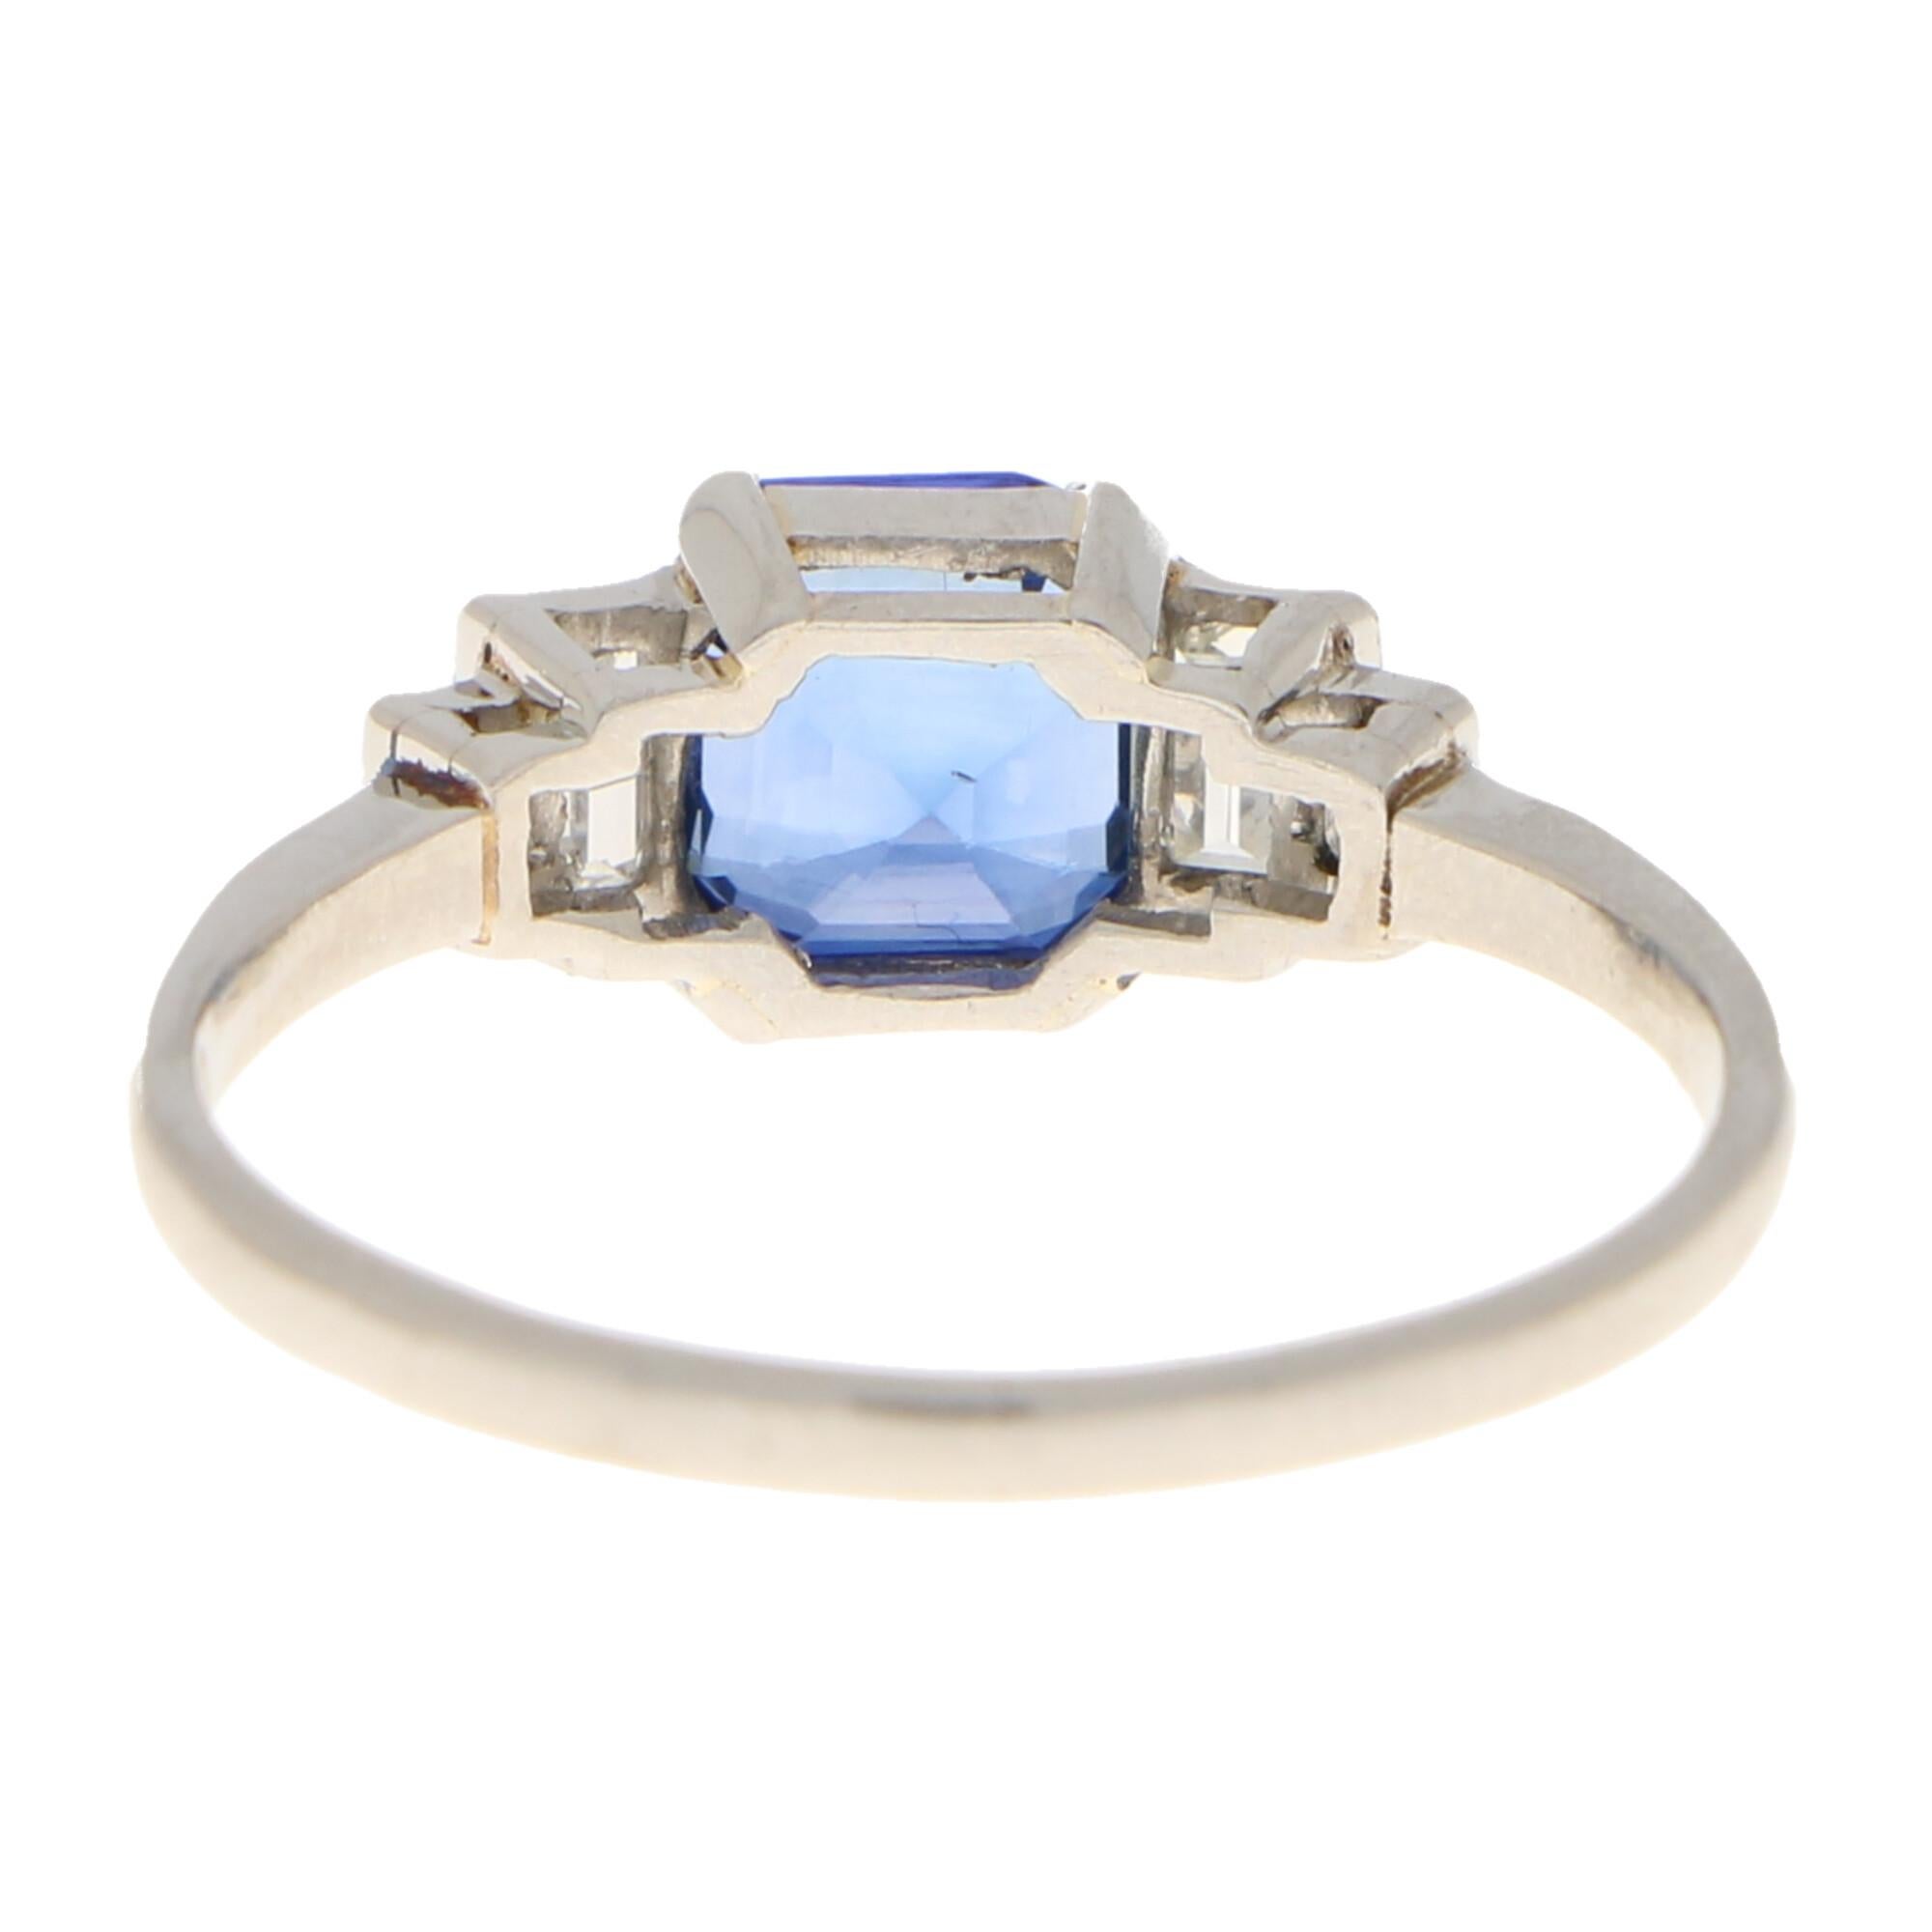 Art Deco Inspired Sapphire and Diamond Engagement Ring Set in Platinum 1